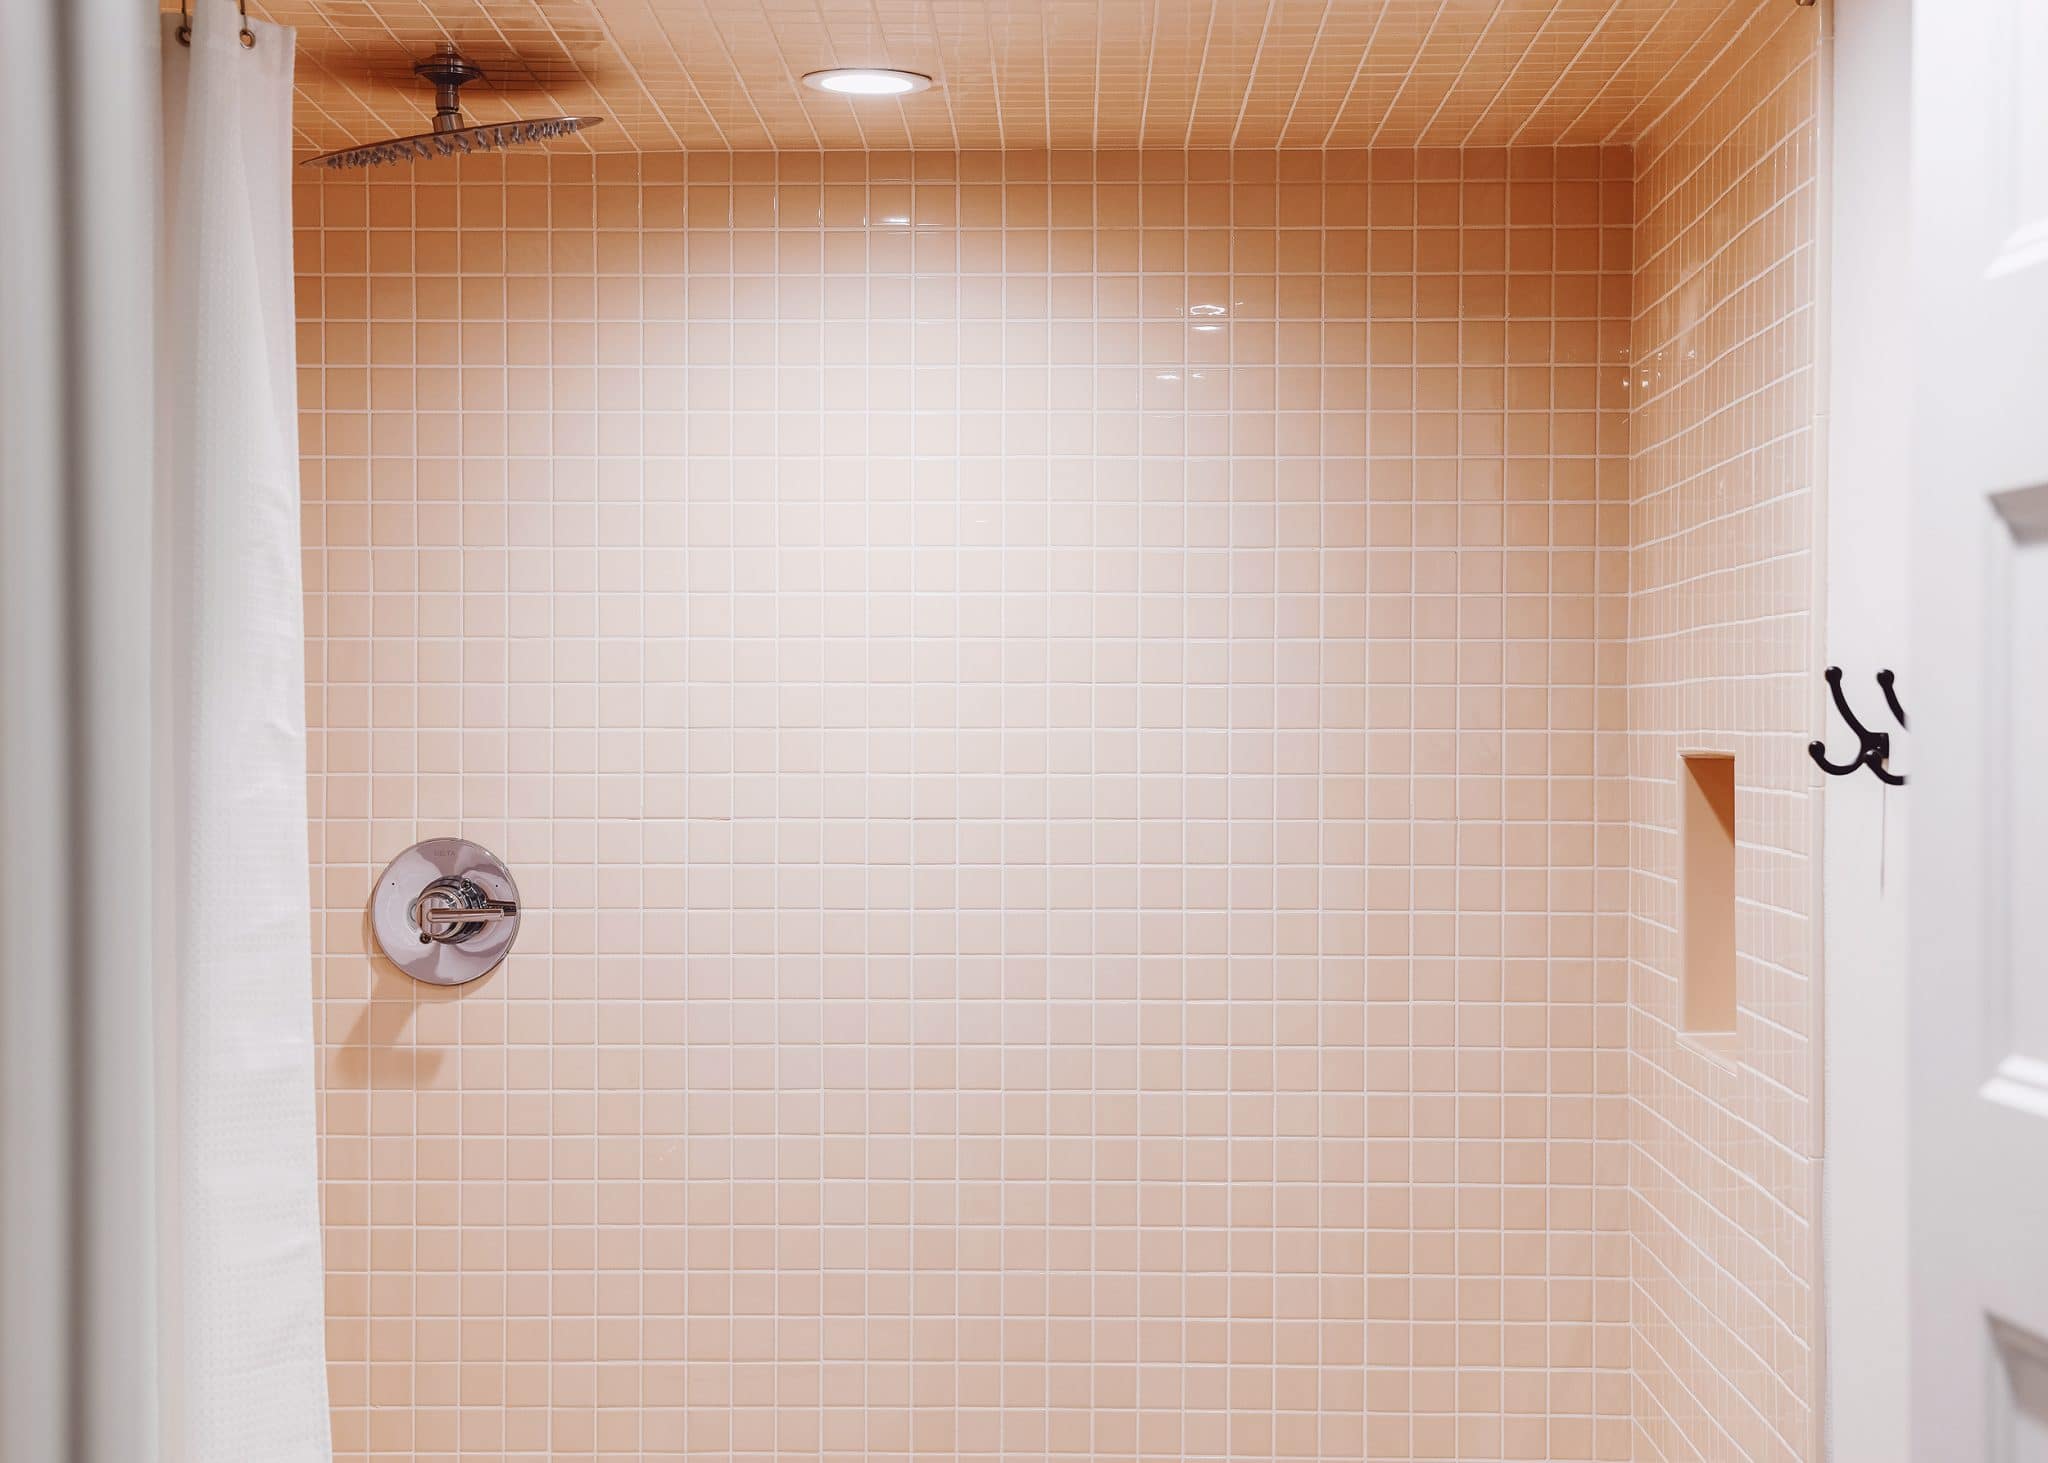 Peach mini square tile in a standing shower enclosure | via Yellow Brick Home